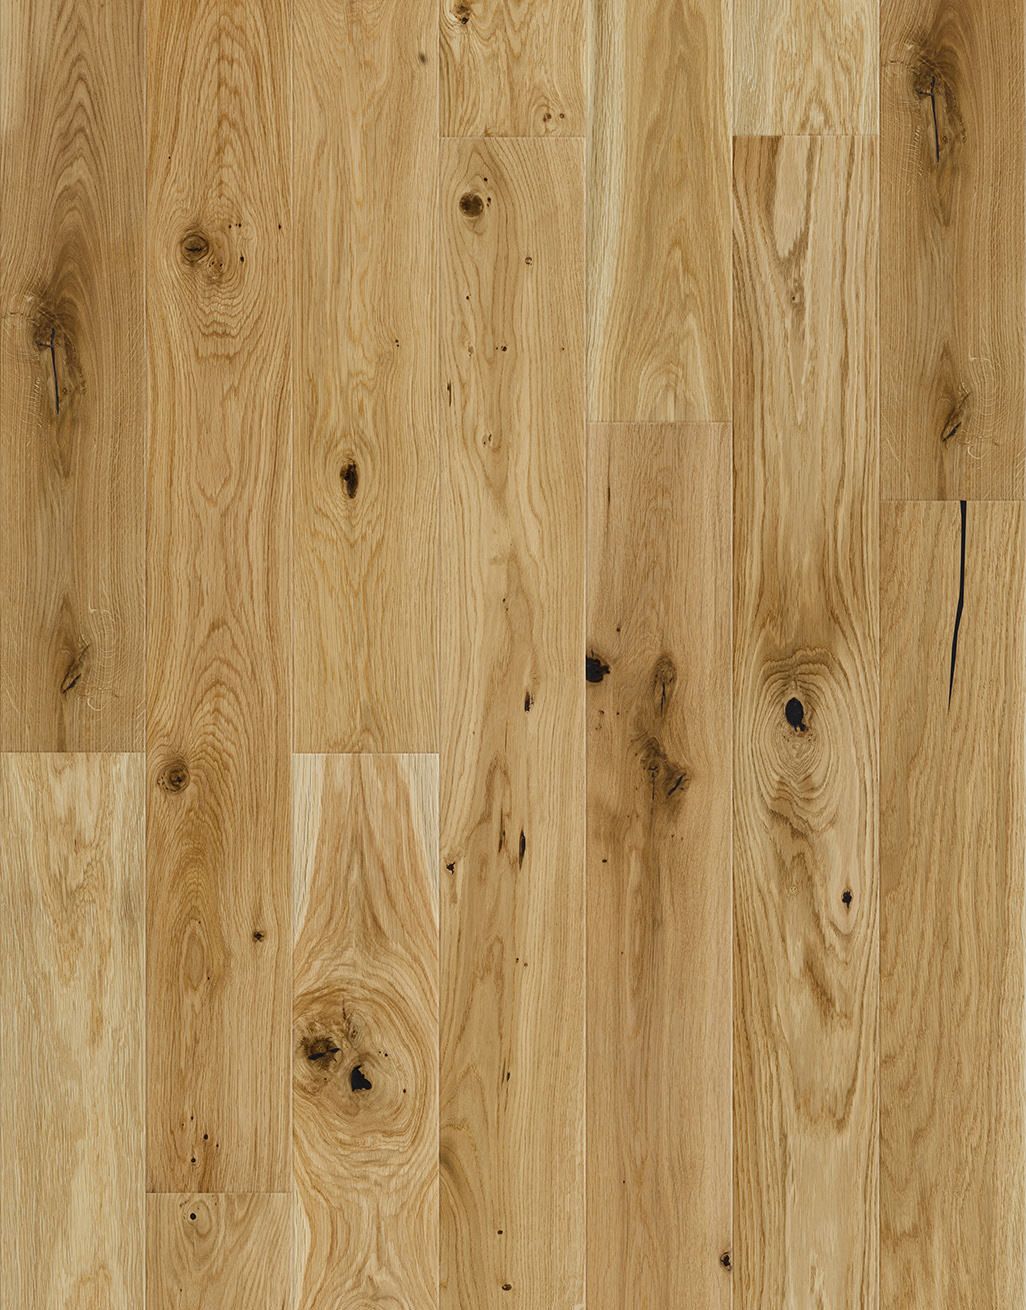 Kensington Natural Oak Brushed & Oiled Engineered Wood Flooring 5